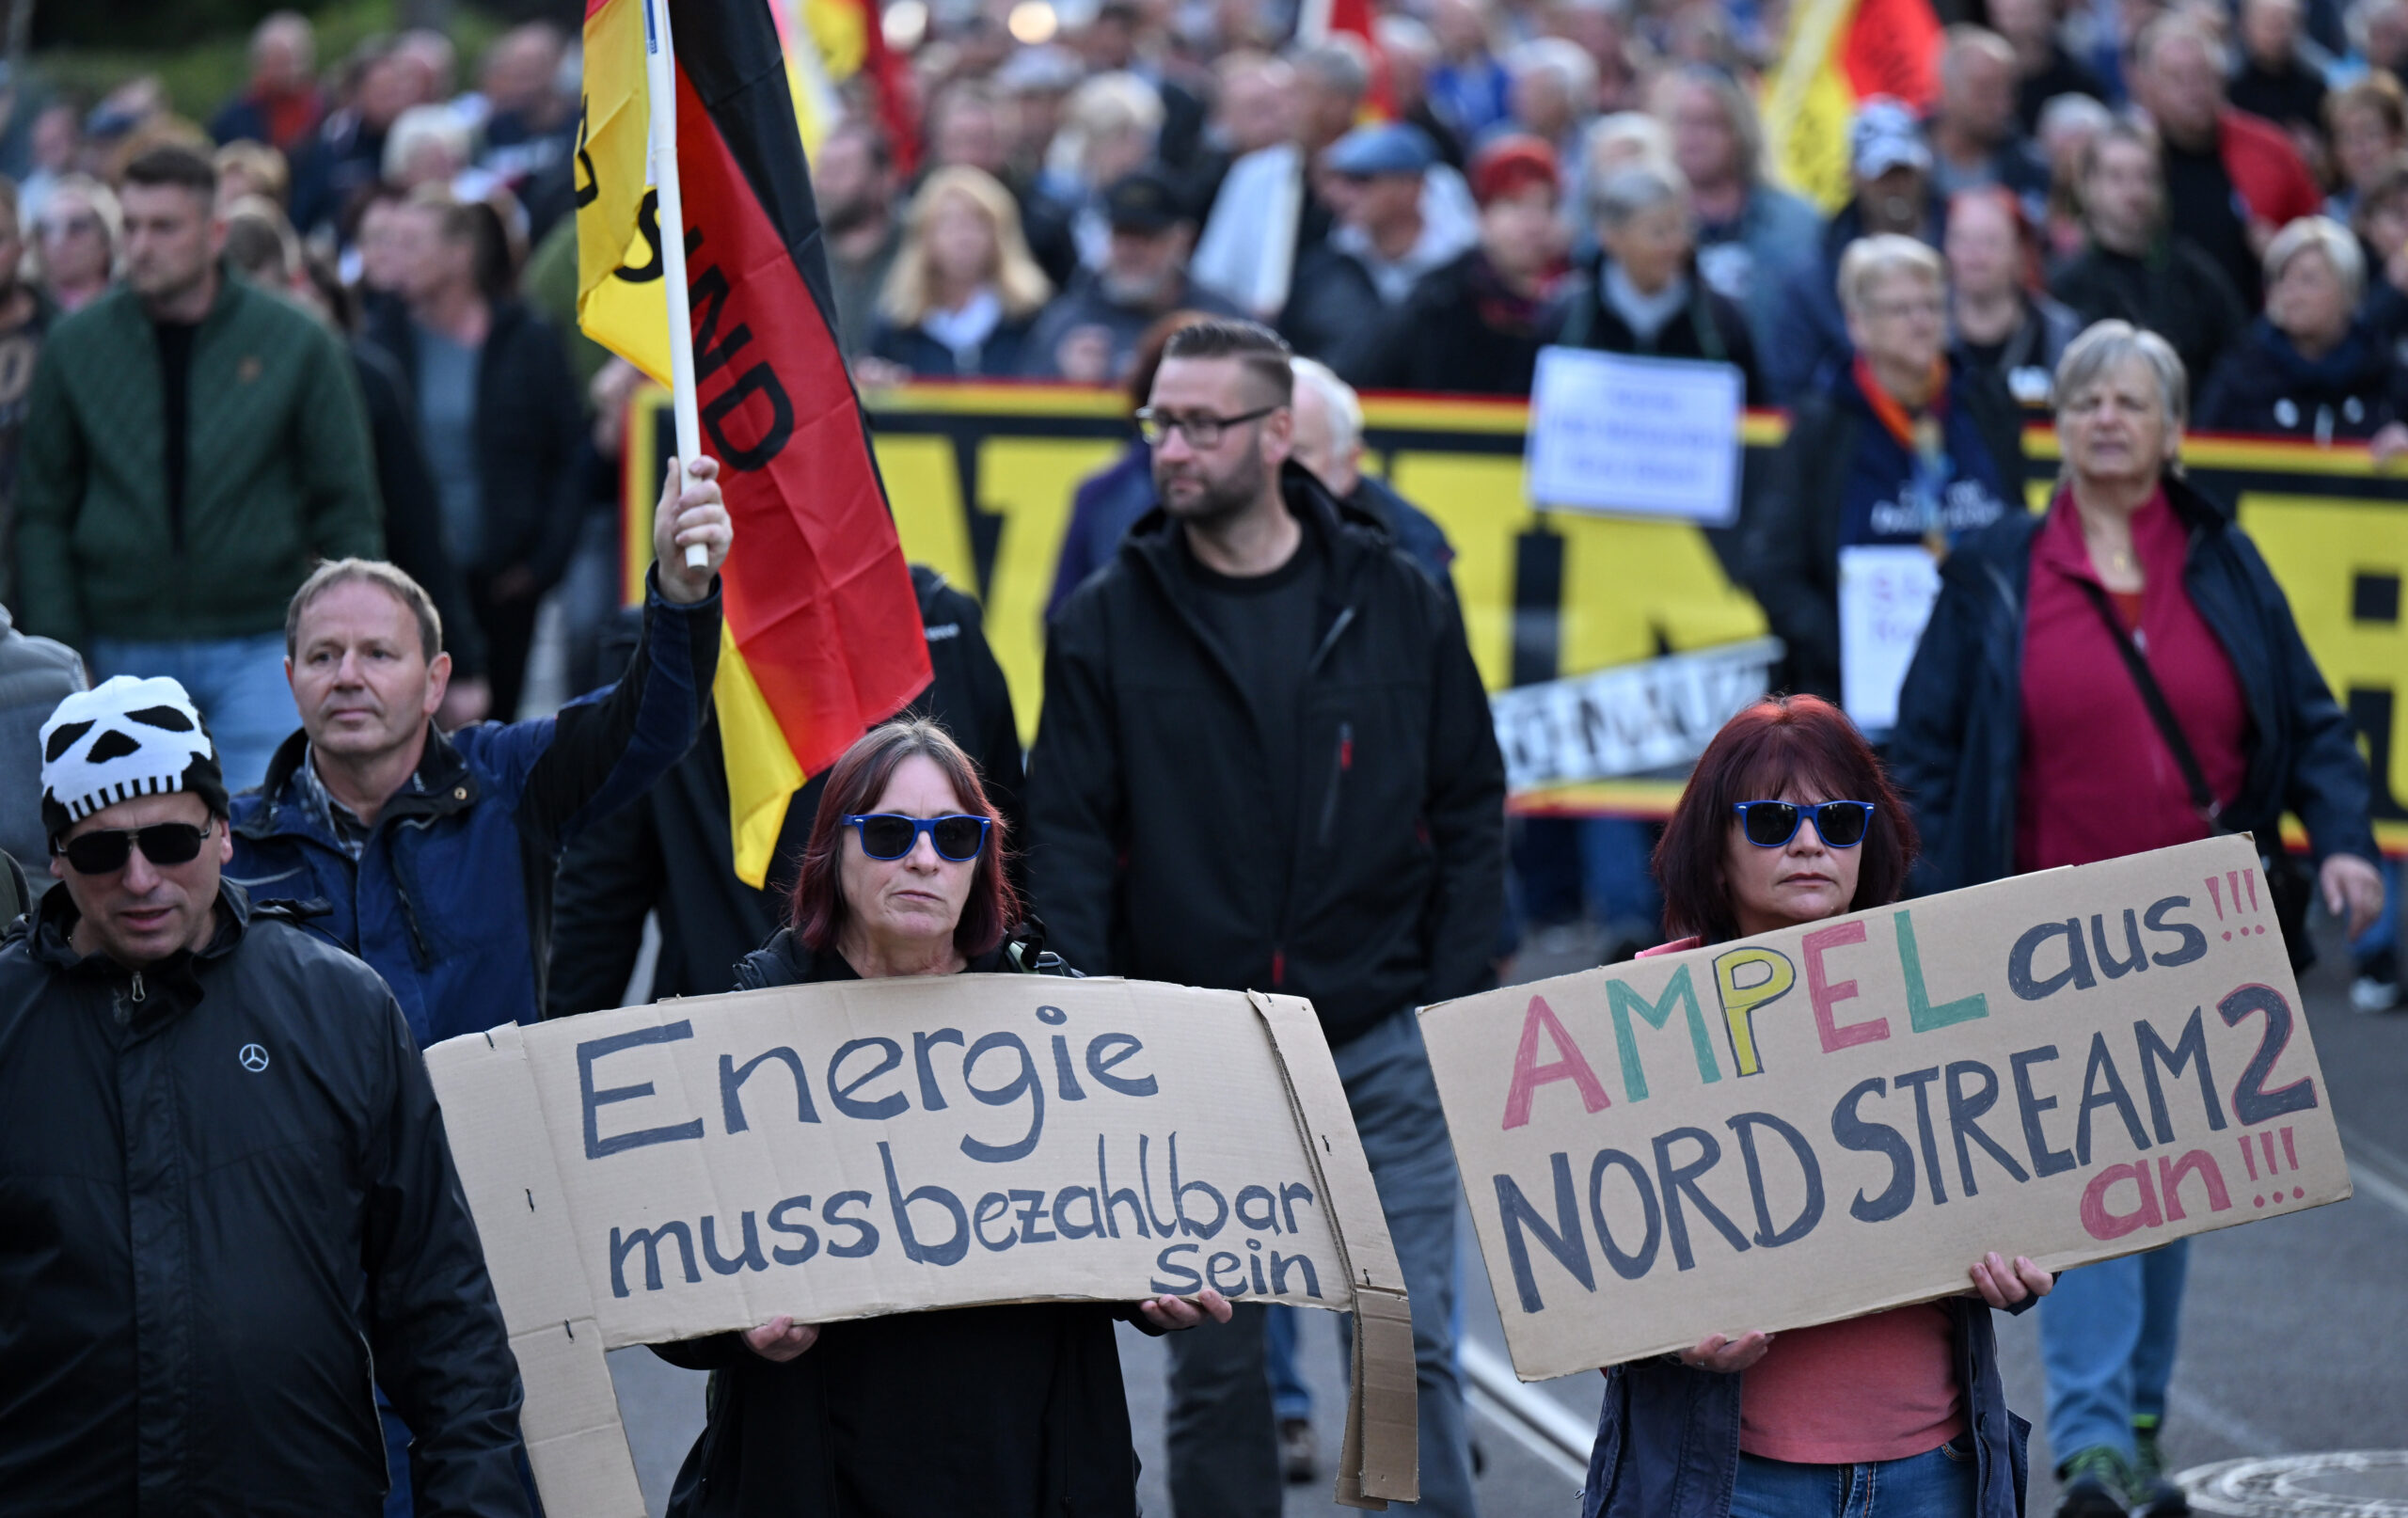 Forderungen wie „Ampel aus! Nord Stream 2 an!“ beobachtet Politologe Wolfgang Muno eher am politisch rechten Rand.